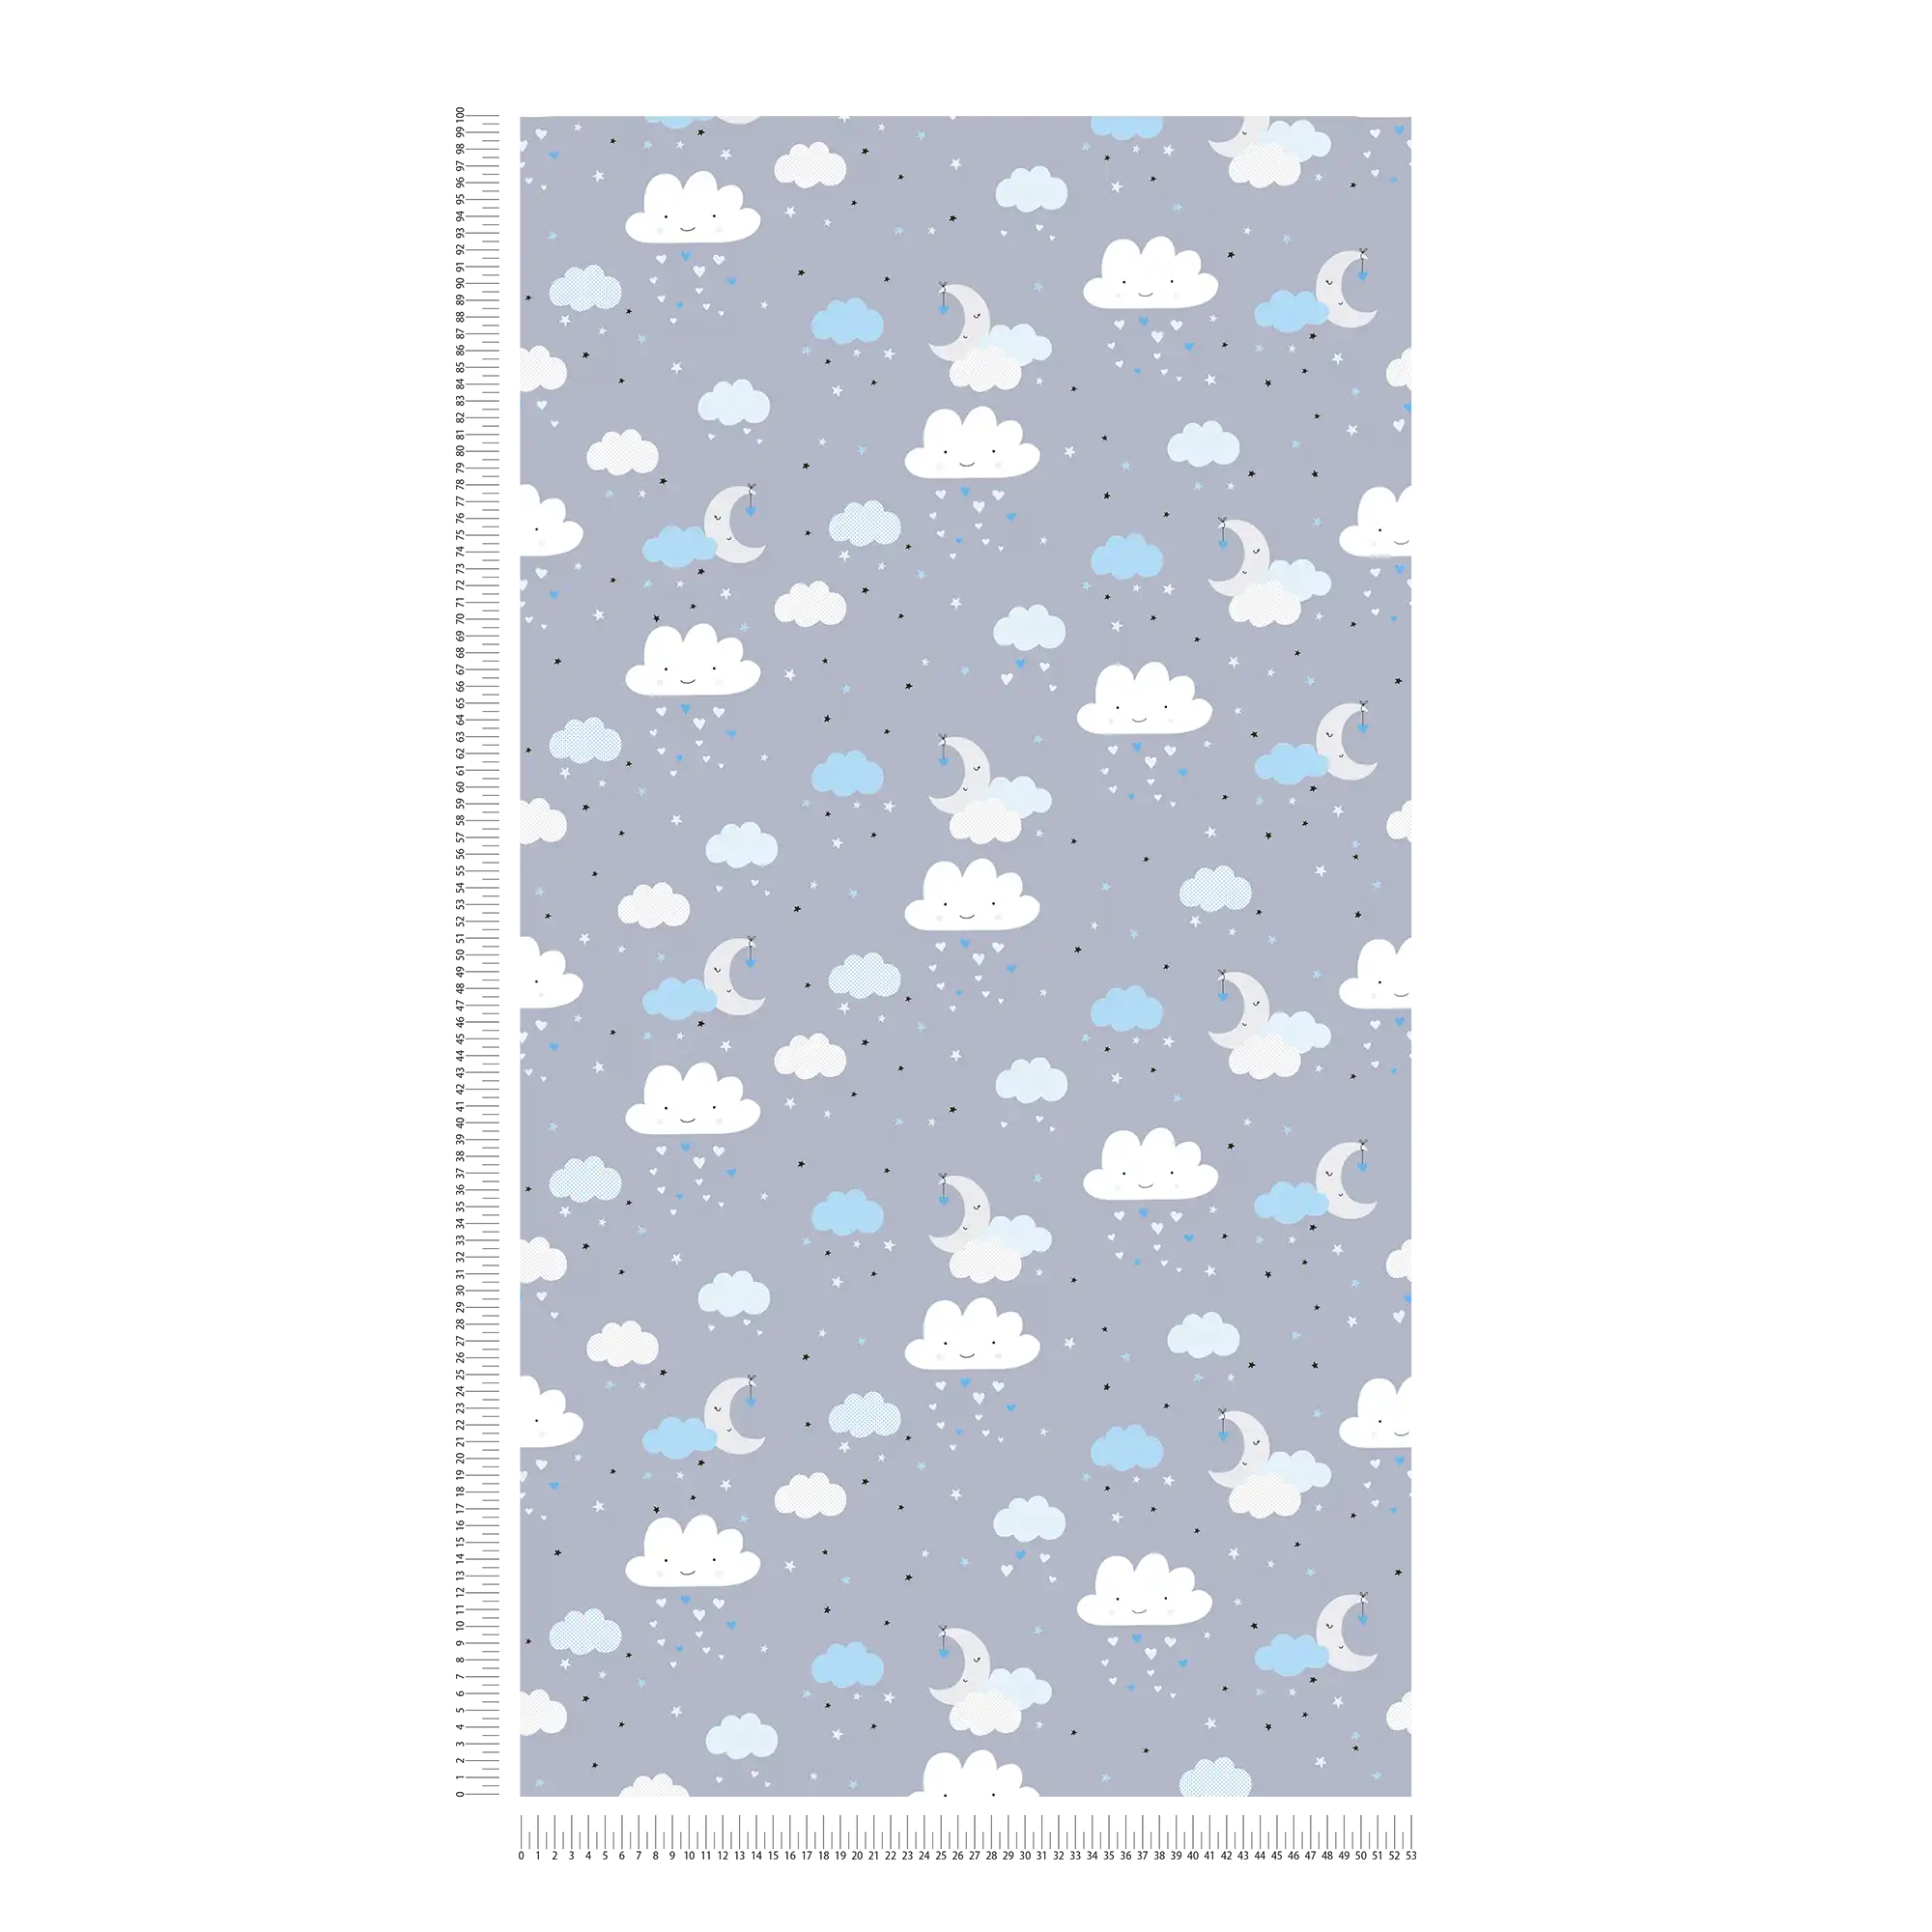             Wallpaper nursery boy night sky clouds - blue, grey, white
        